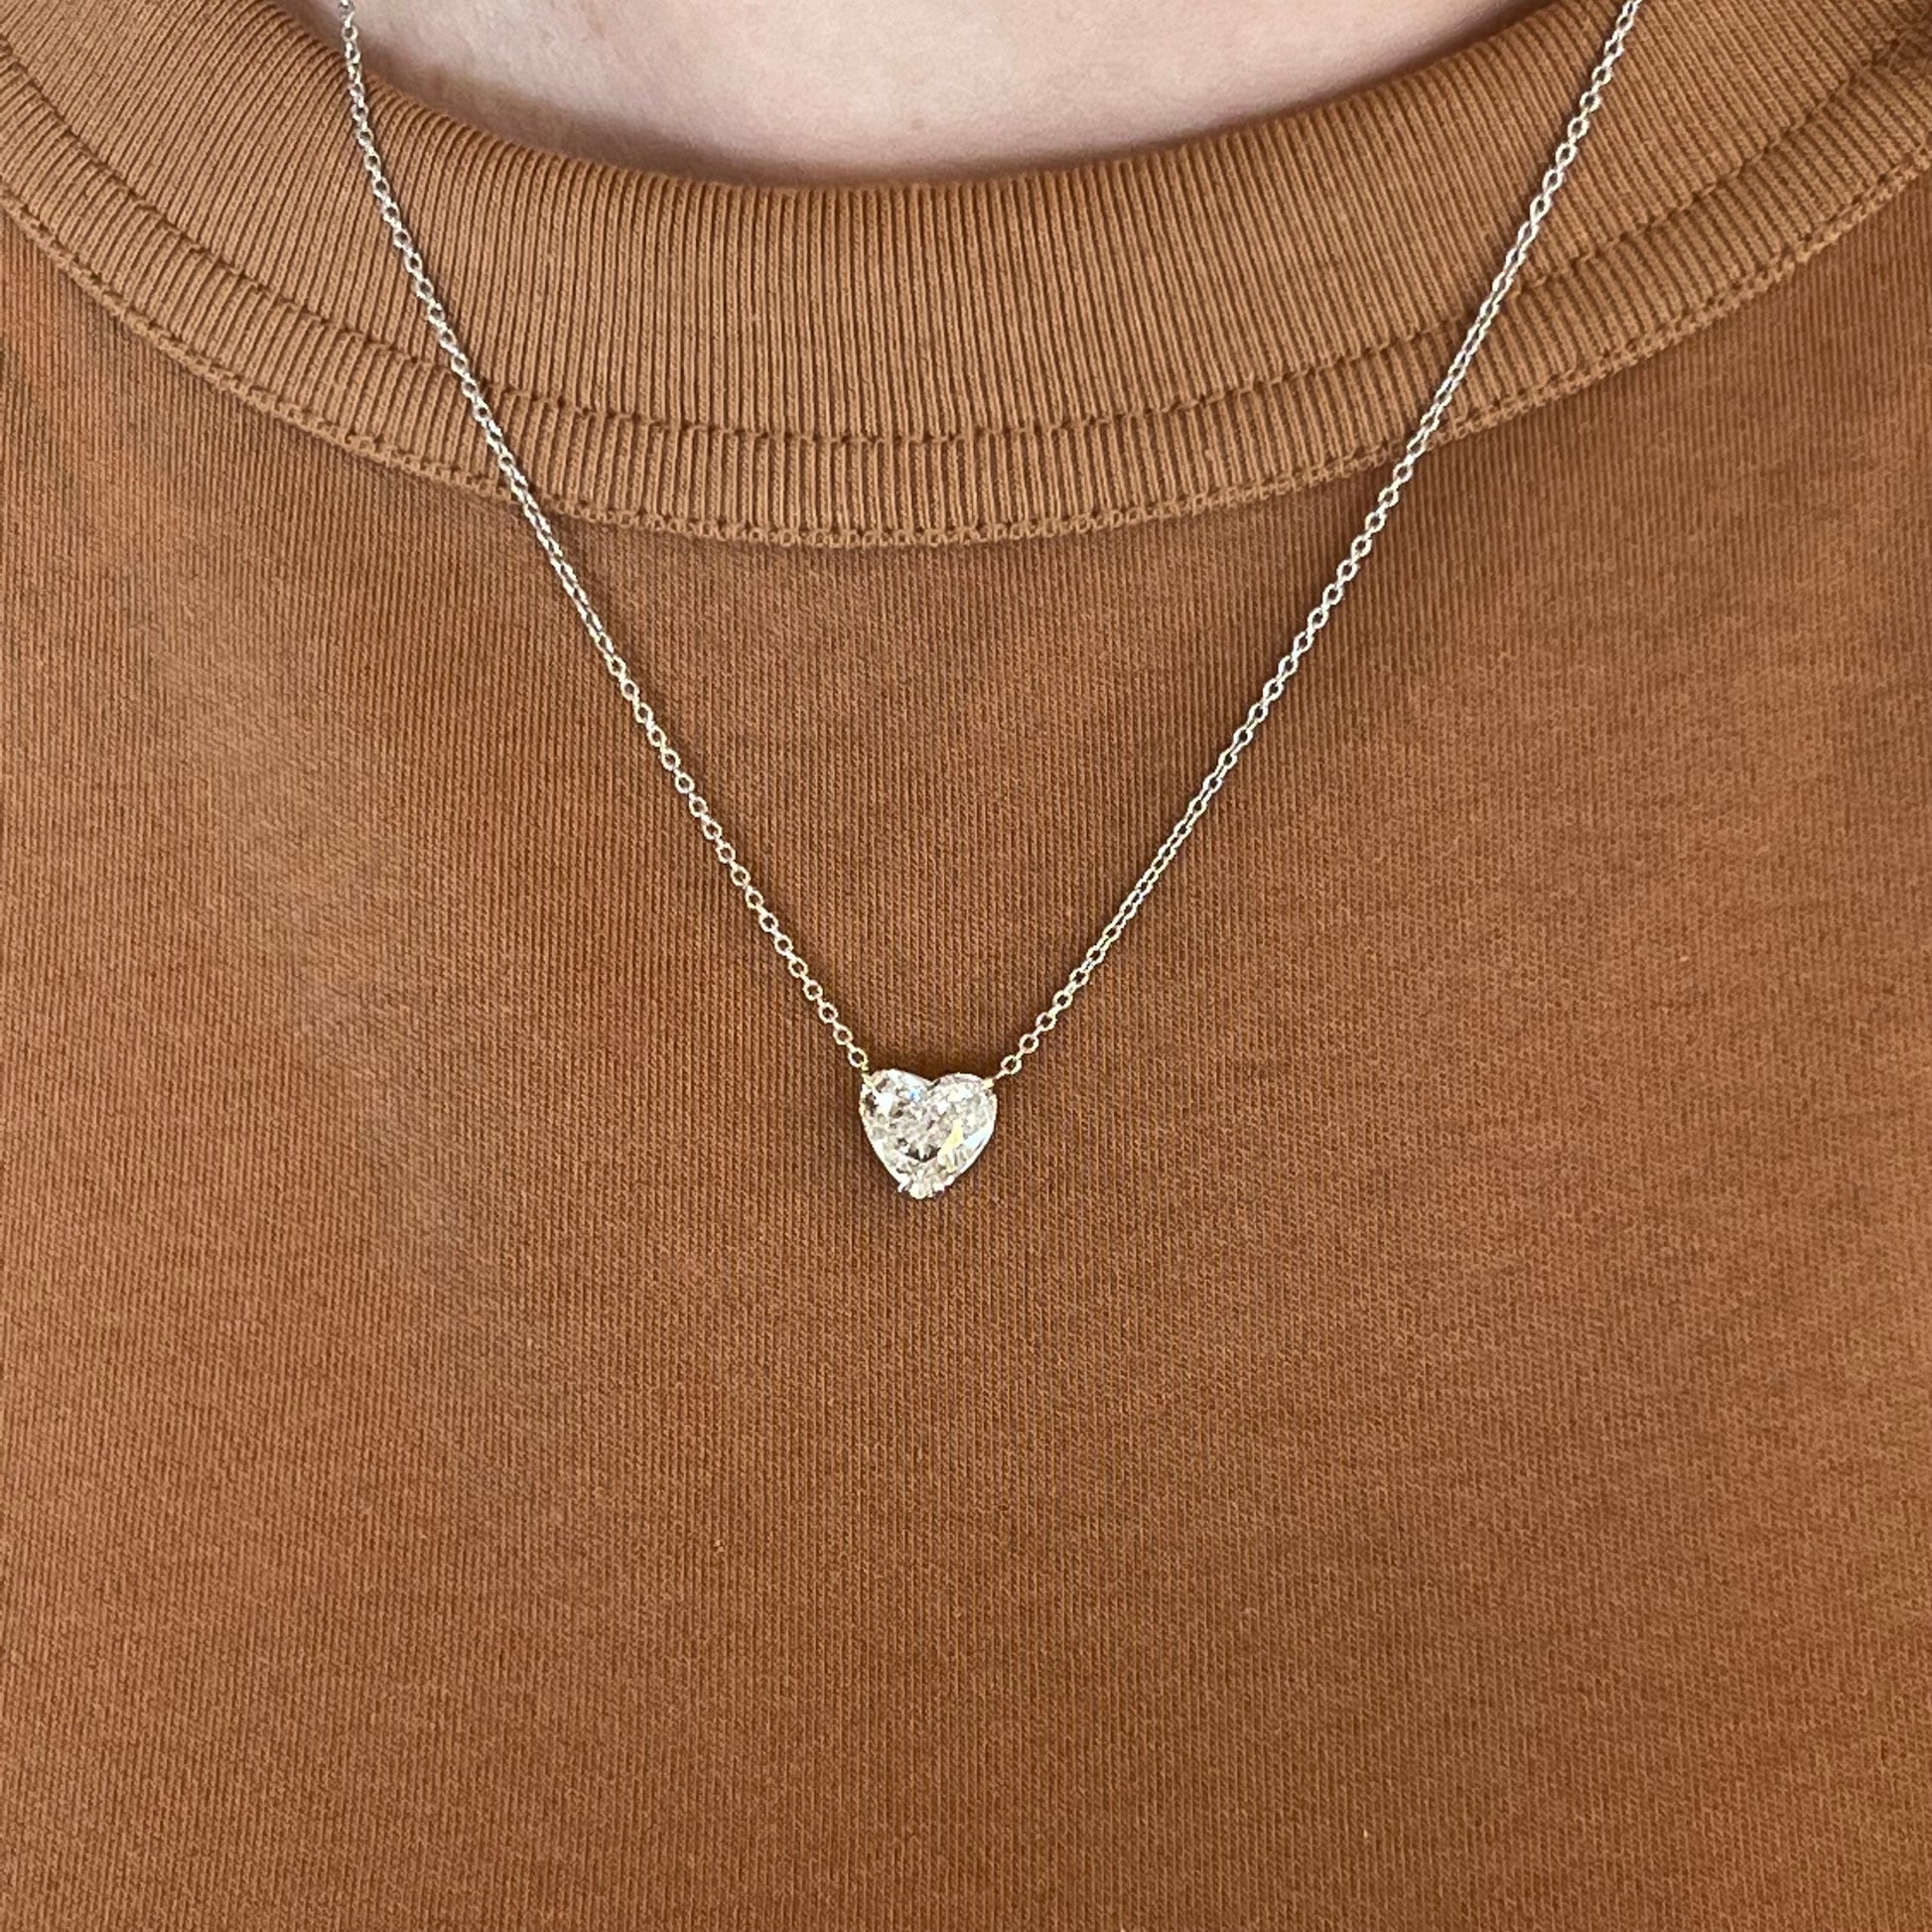 2.01 Heart Shaped Diamond Pendant Necklace in Platinum